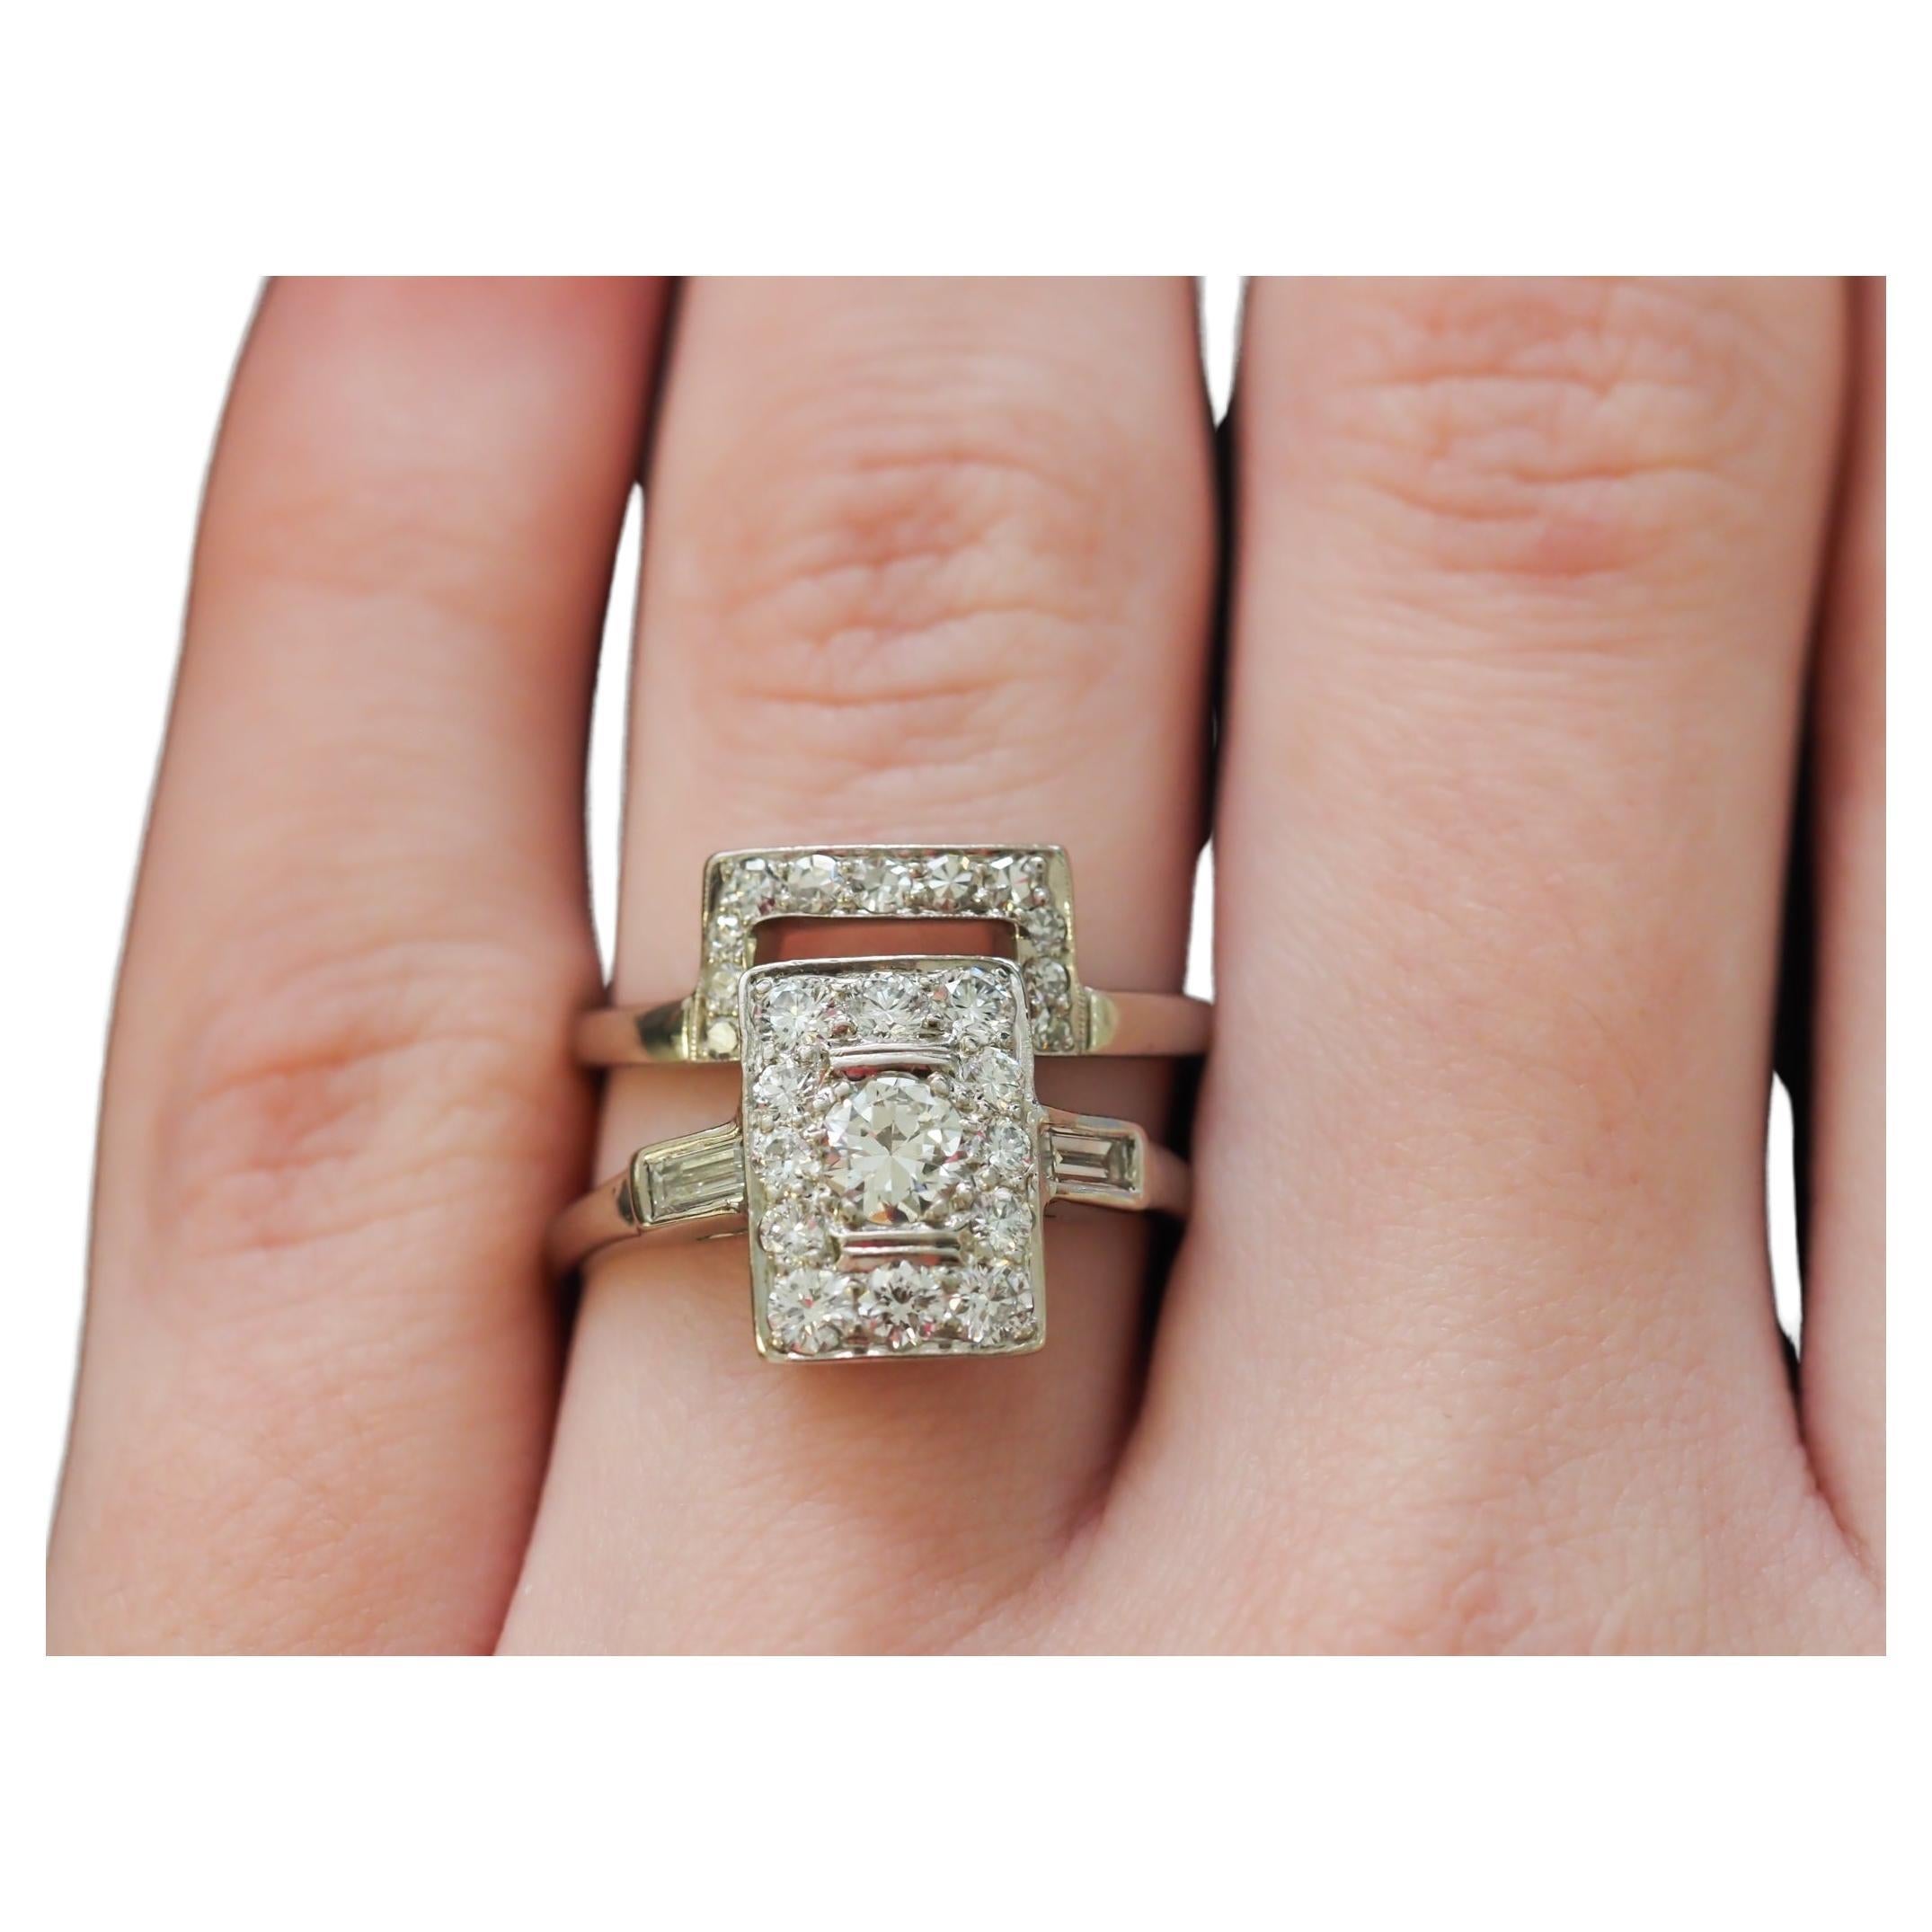 14 Karat White Gold Art Deco Old European Diamond Engagement Ring and Band Set